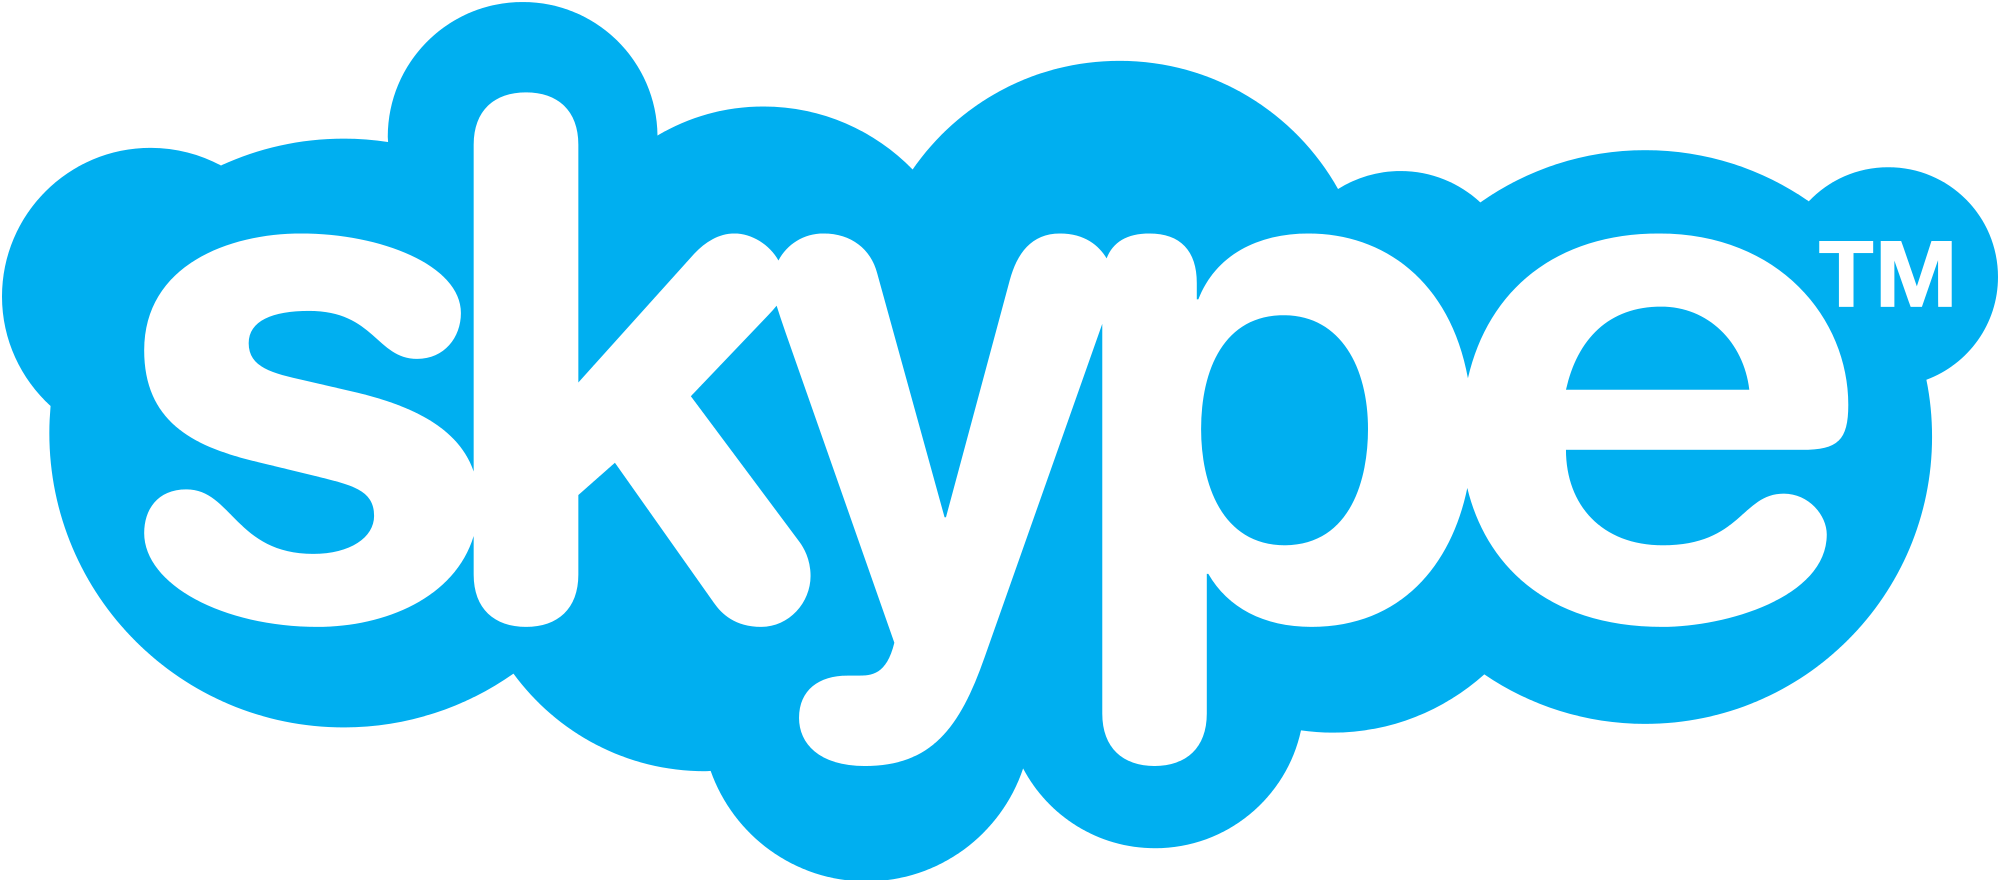 Skype logo.svg